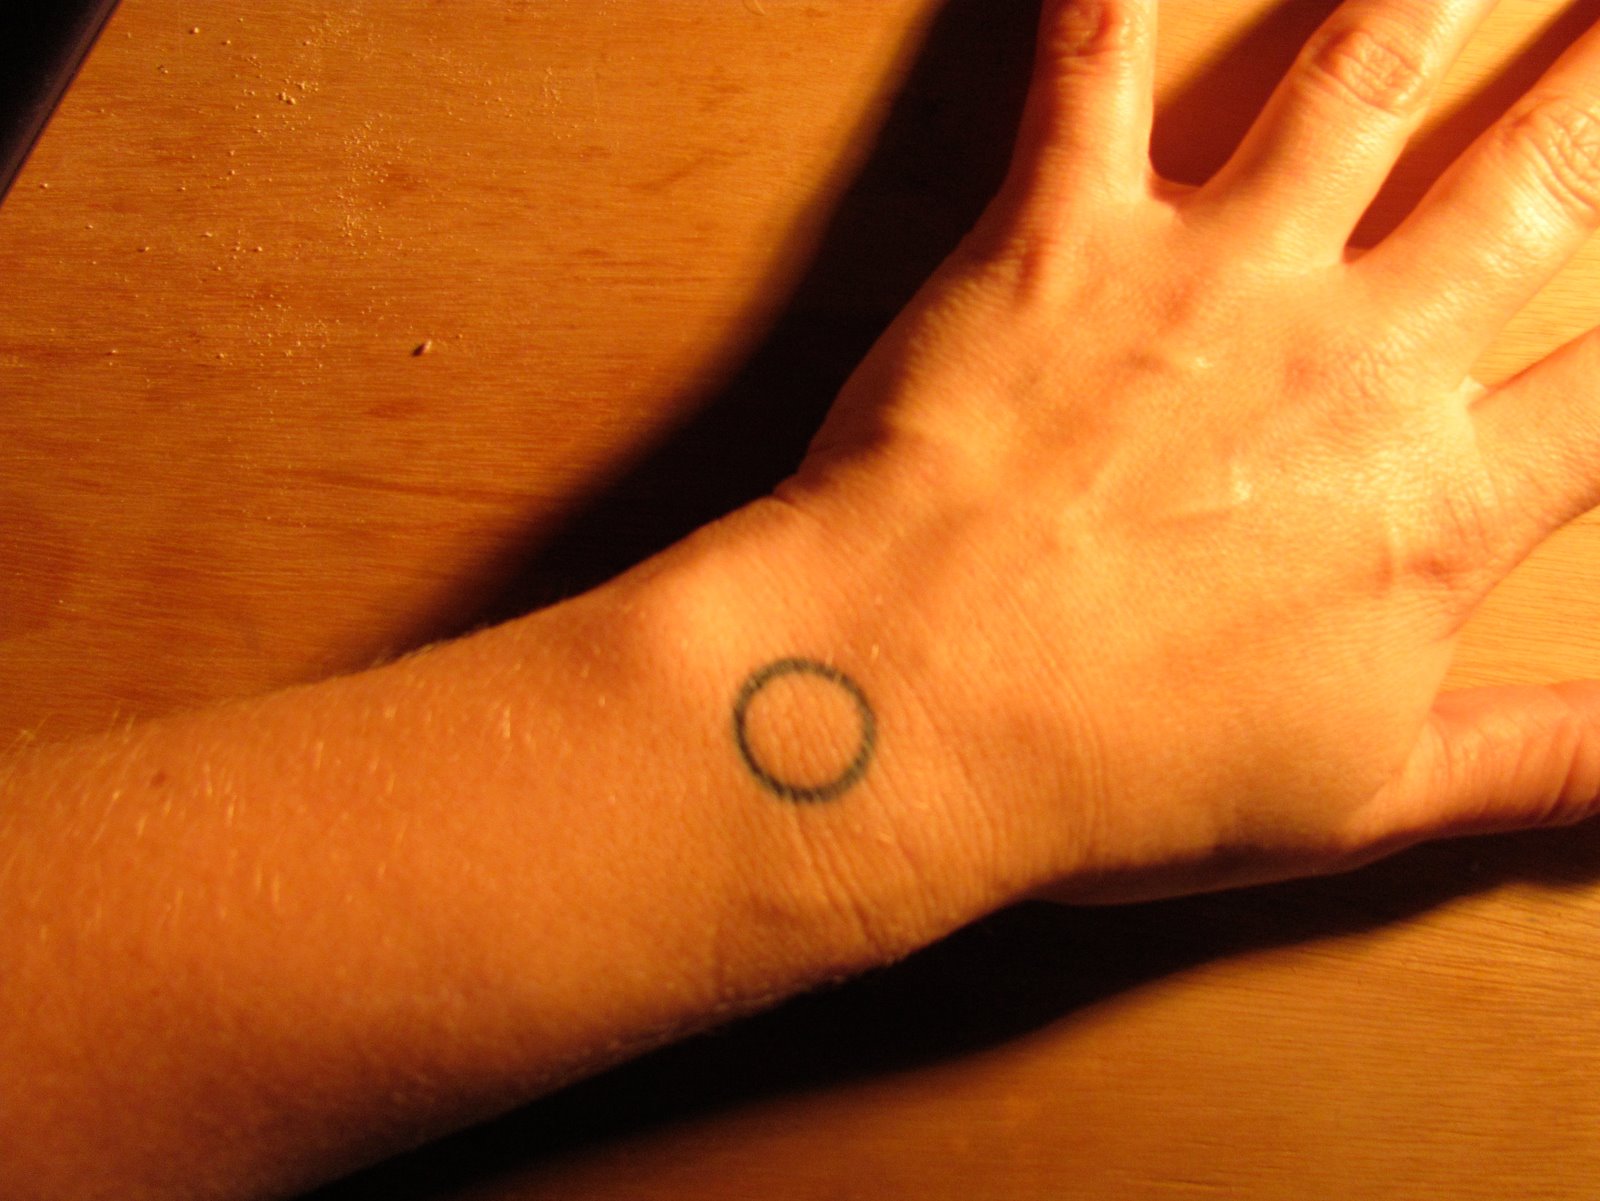 Small Circle Tattoo